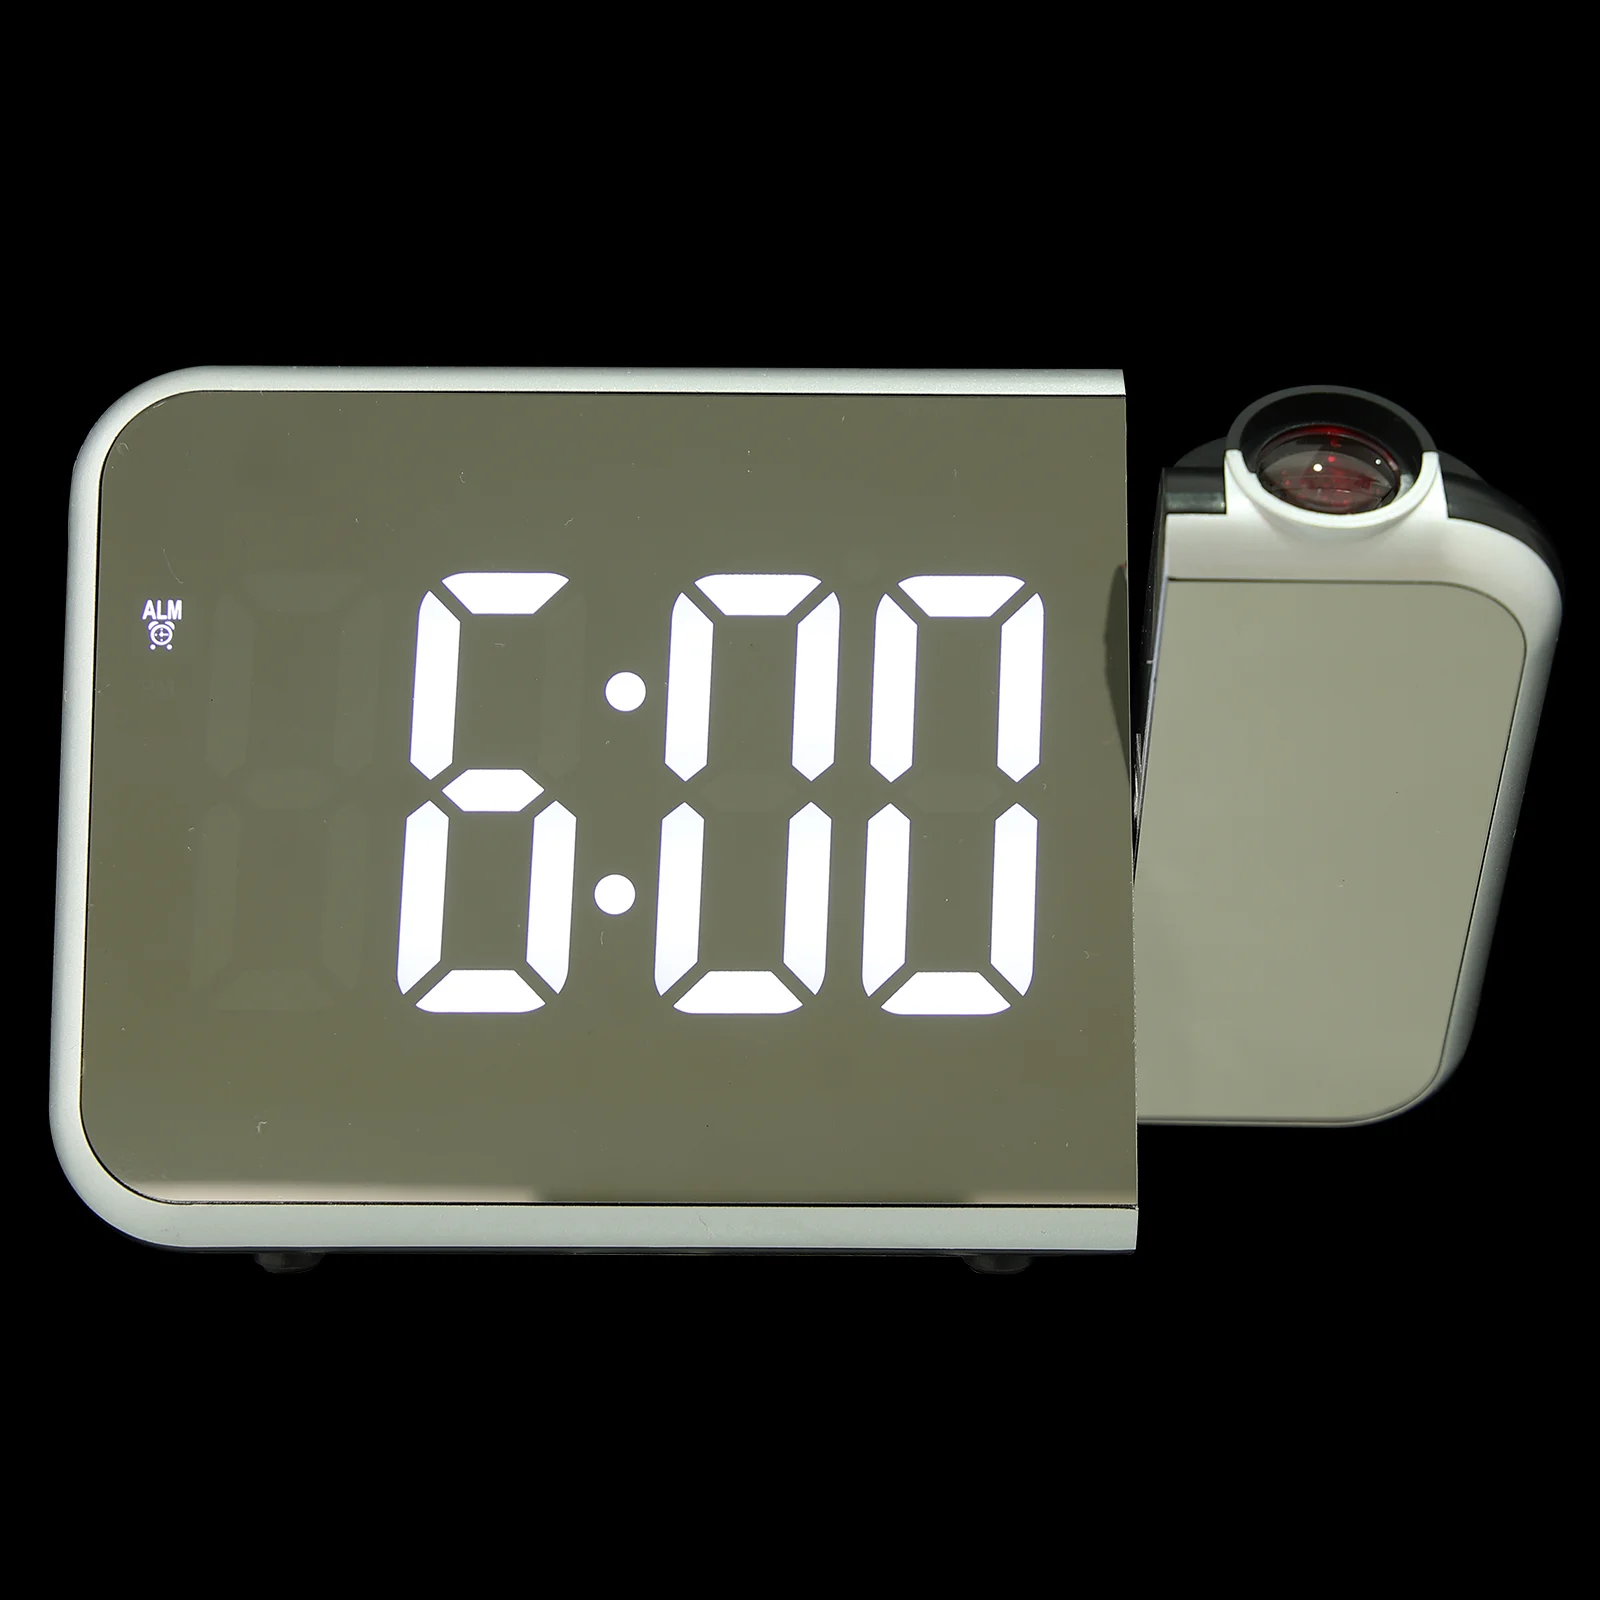 

Clock Alarm Projection Digital Bedroom Projector Ledelectronicnightstand Ceiling Desk Light Wake Bedside Wall Clocks Small Timer